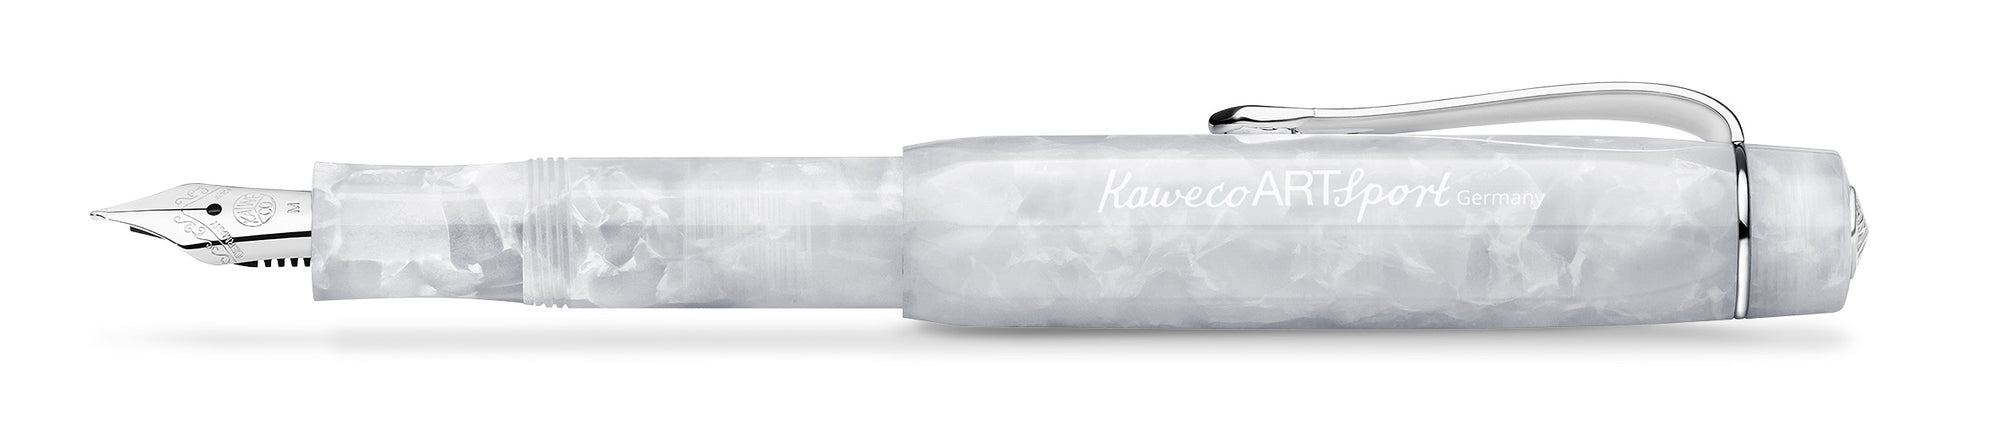 Kaweco Art Sport Fountain Pen - Mineral white - Blesket Canada